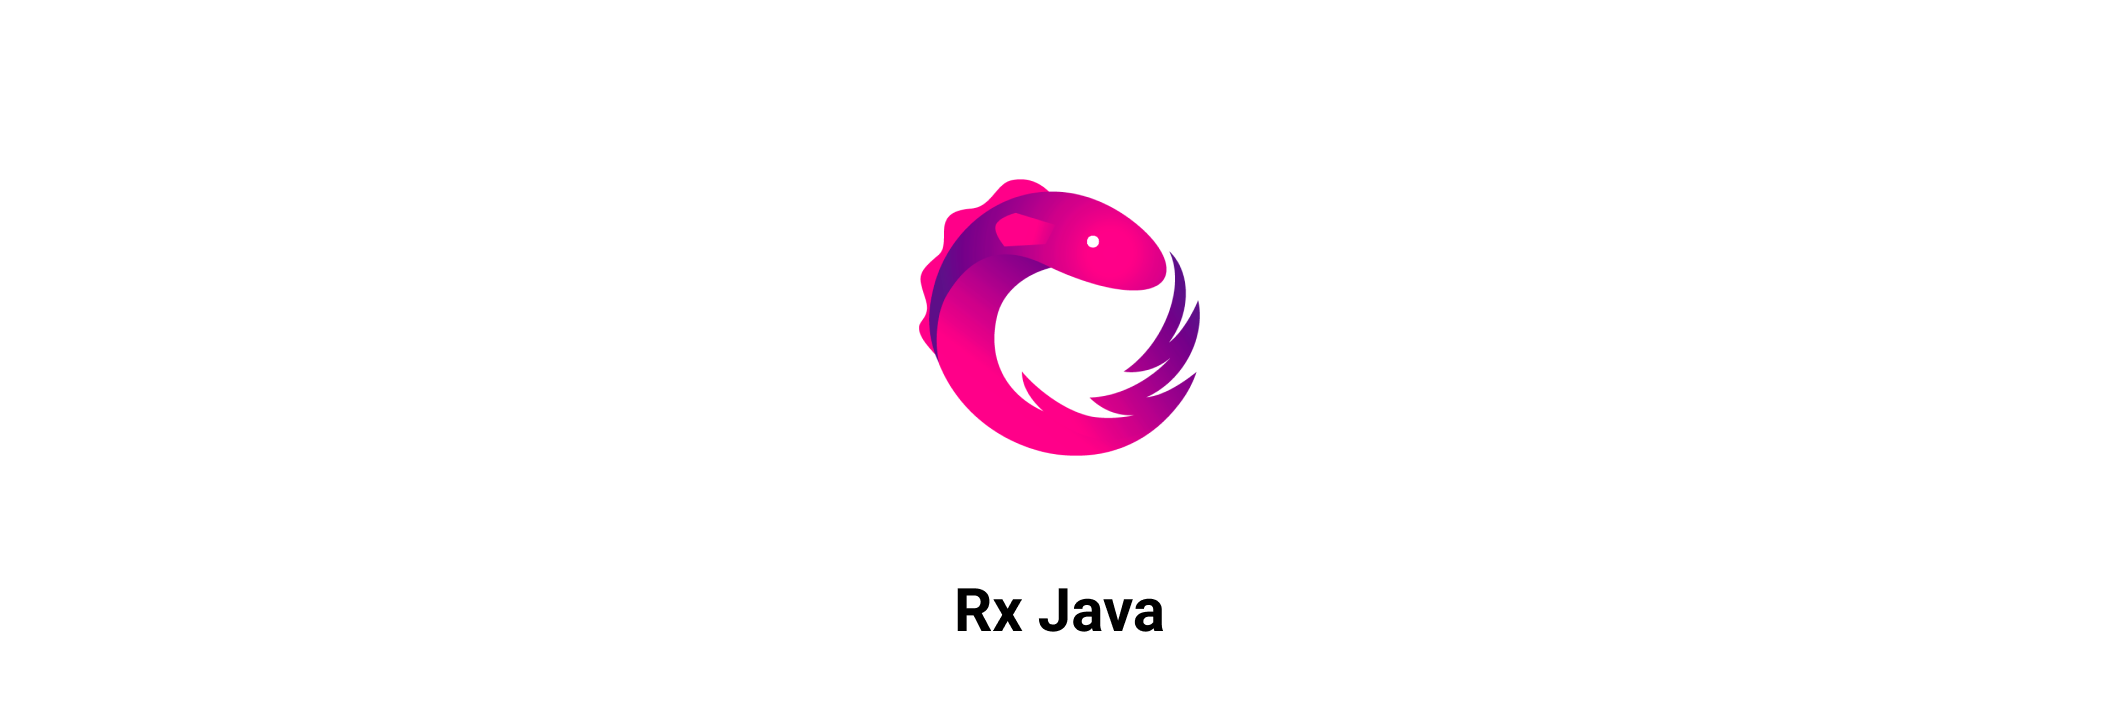 Best Android Development Tools RX Java